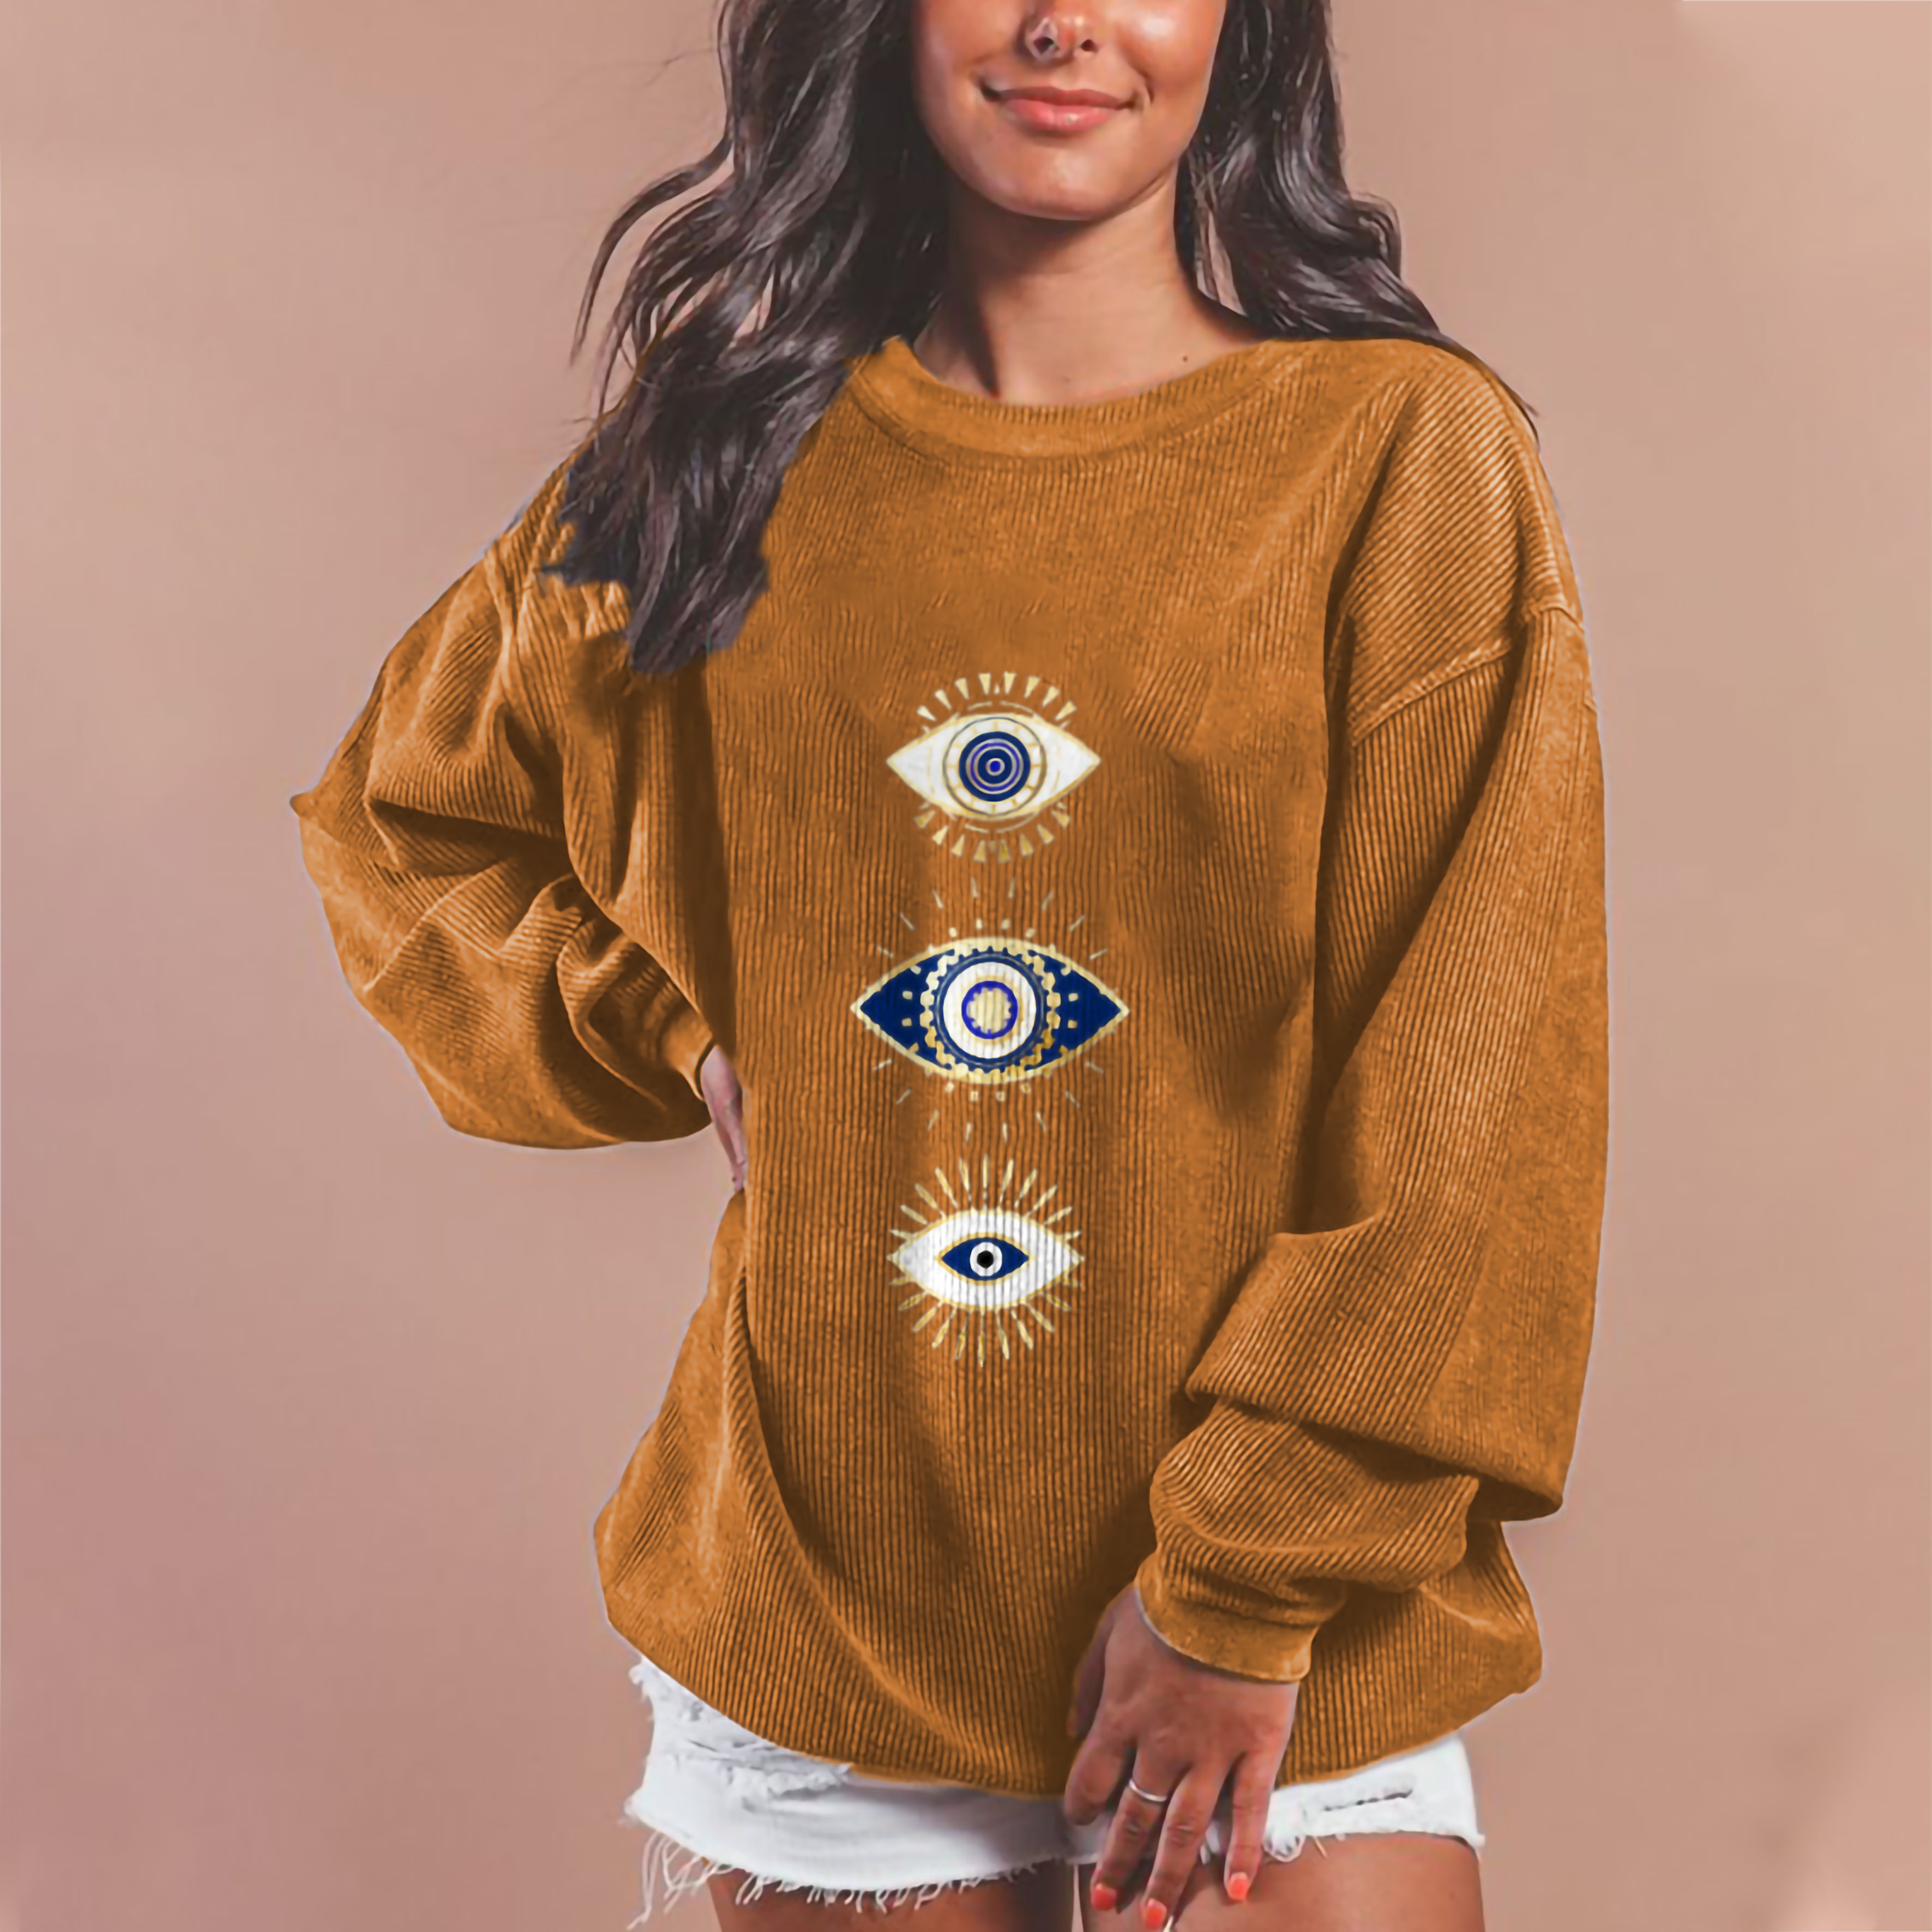 Neojana Retro Unique Eye Print Women Sweatshirt - chicyea